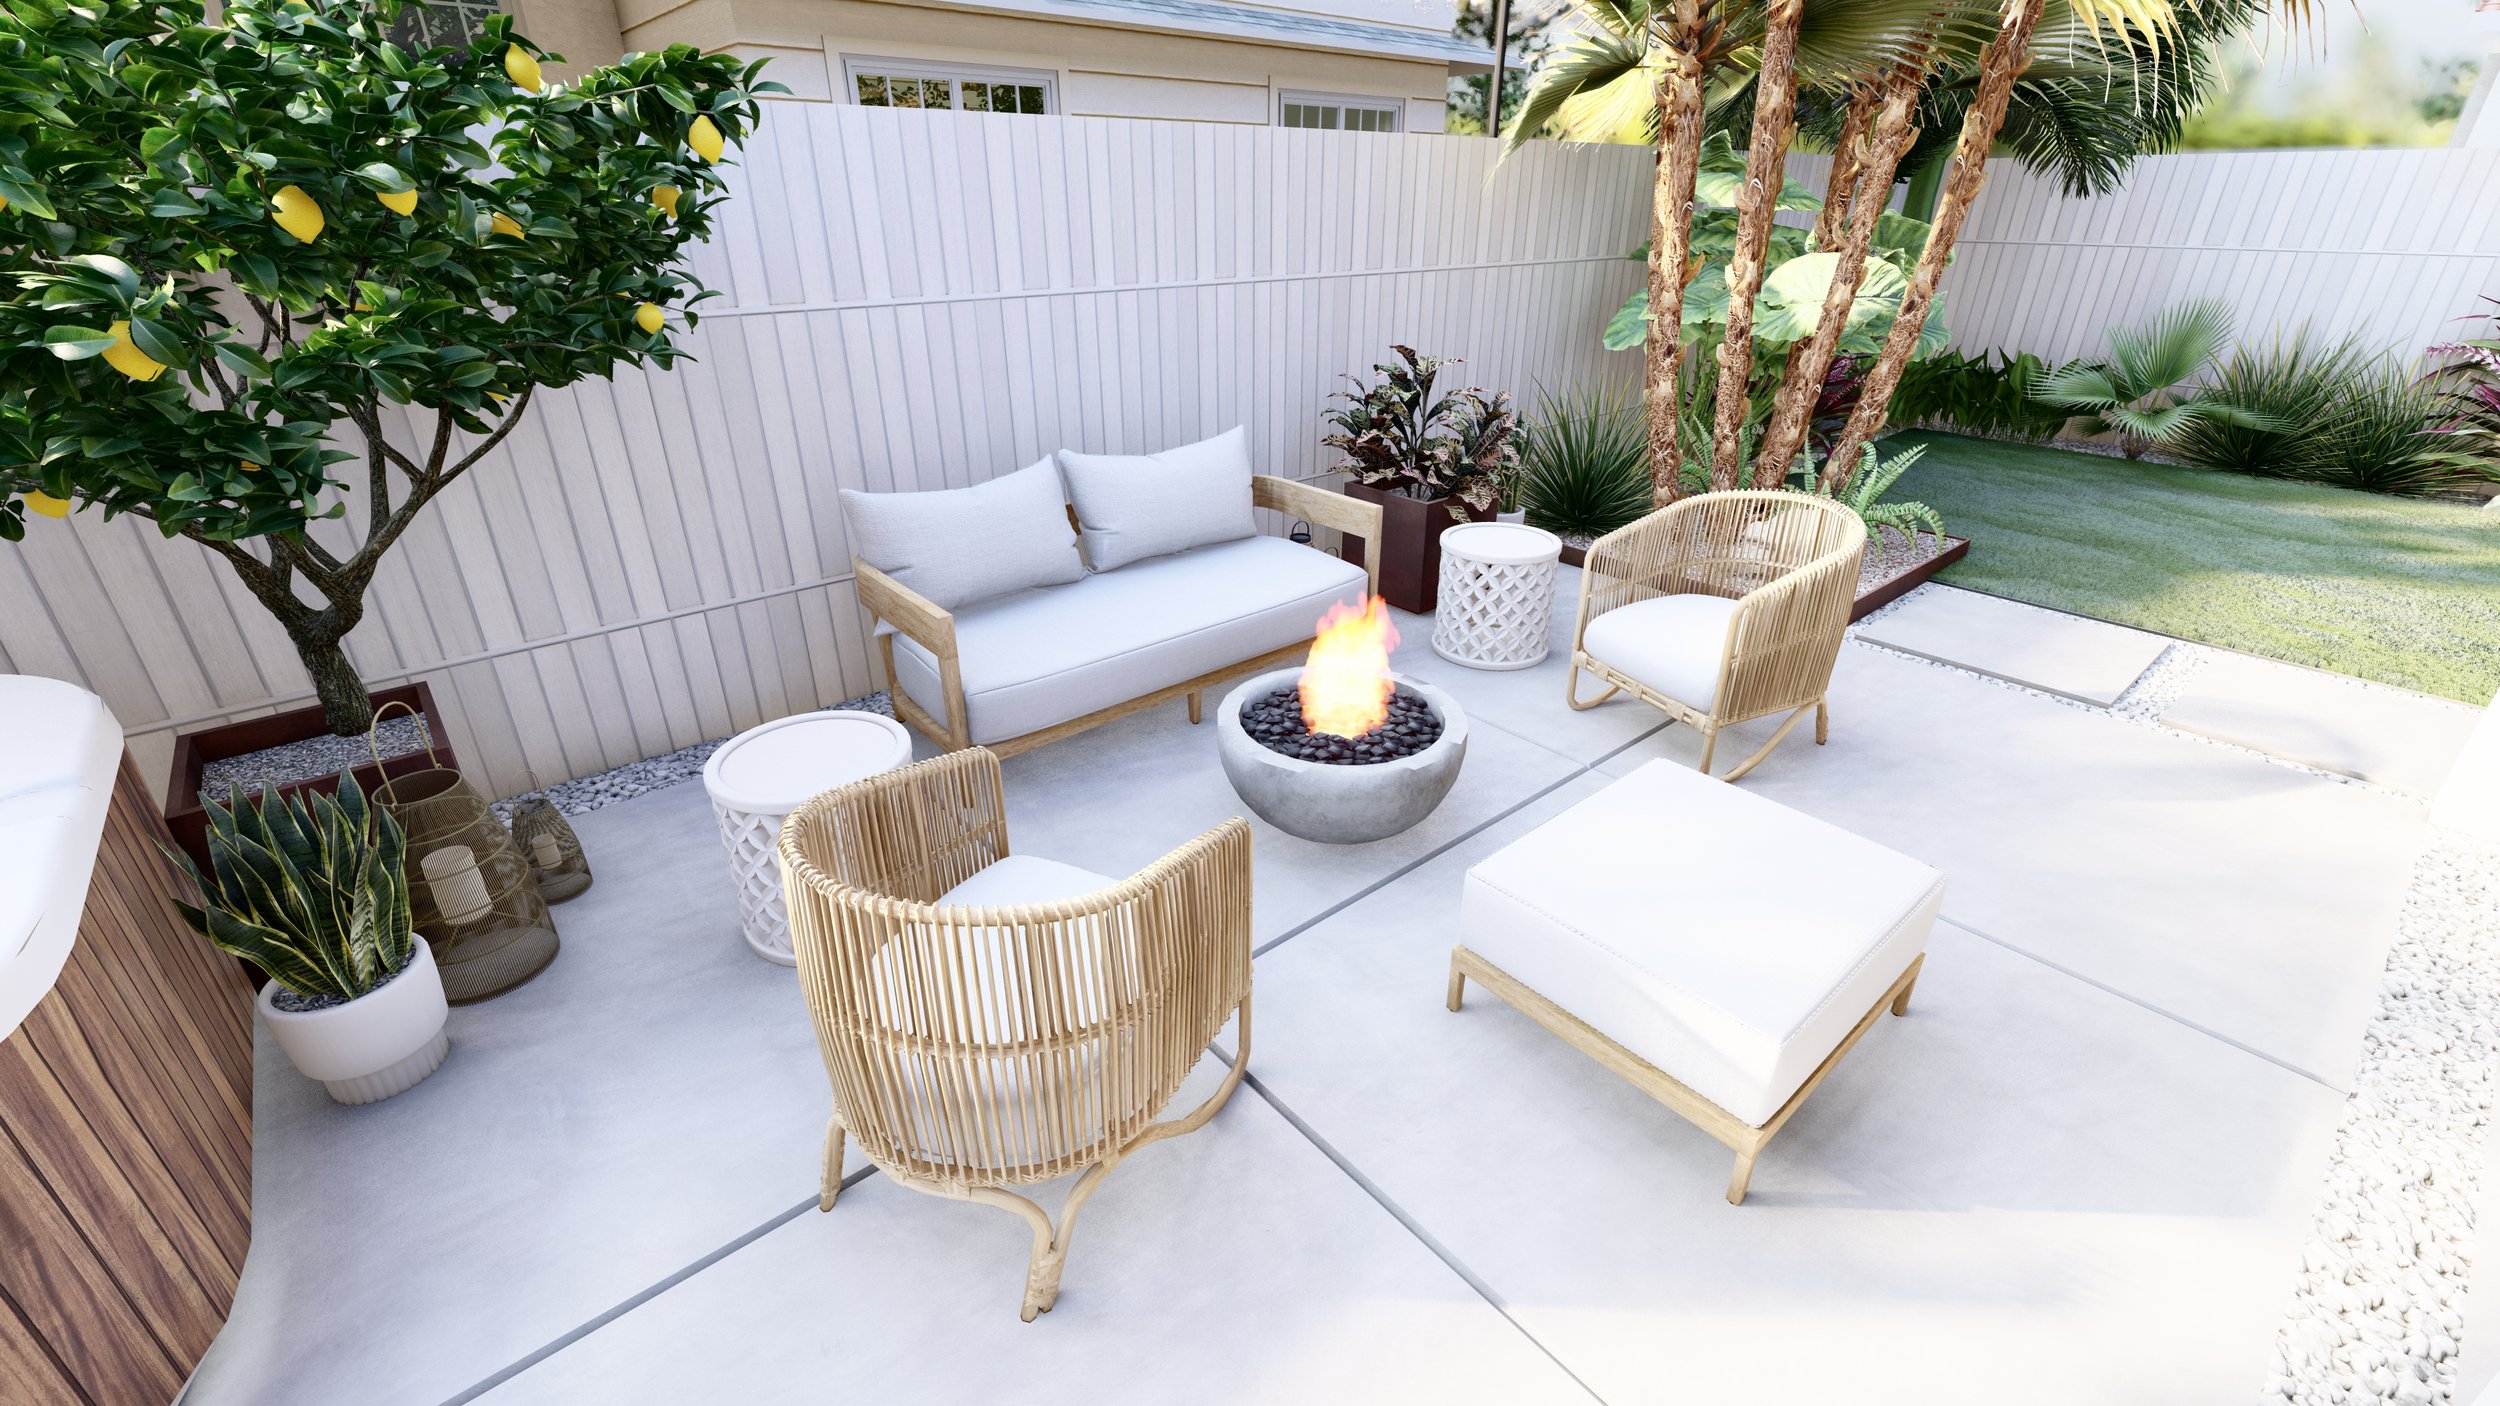 Florida patio design with Balmain sofa, modern fire pit, and bohemian rattan lounge chairs.